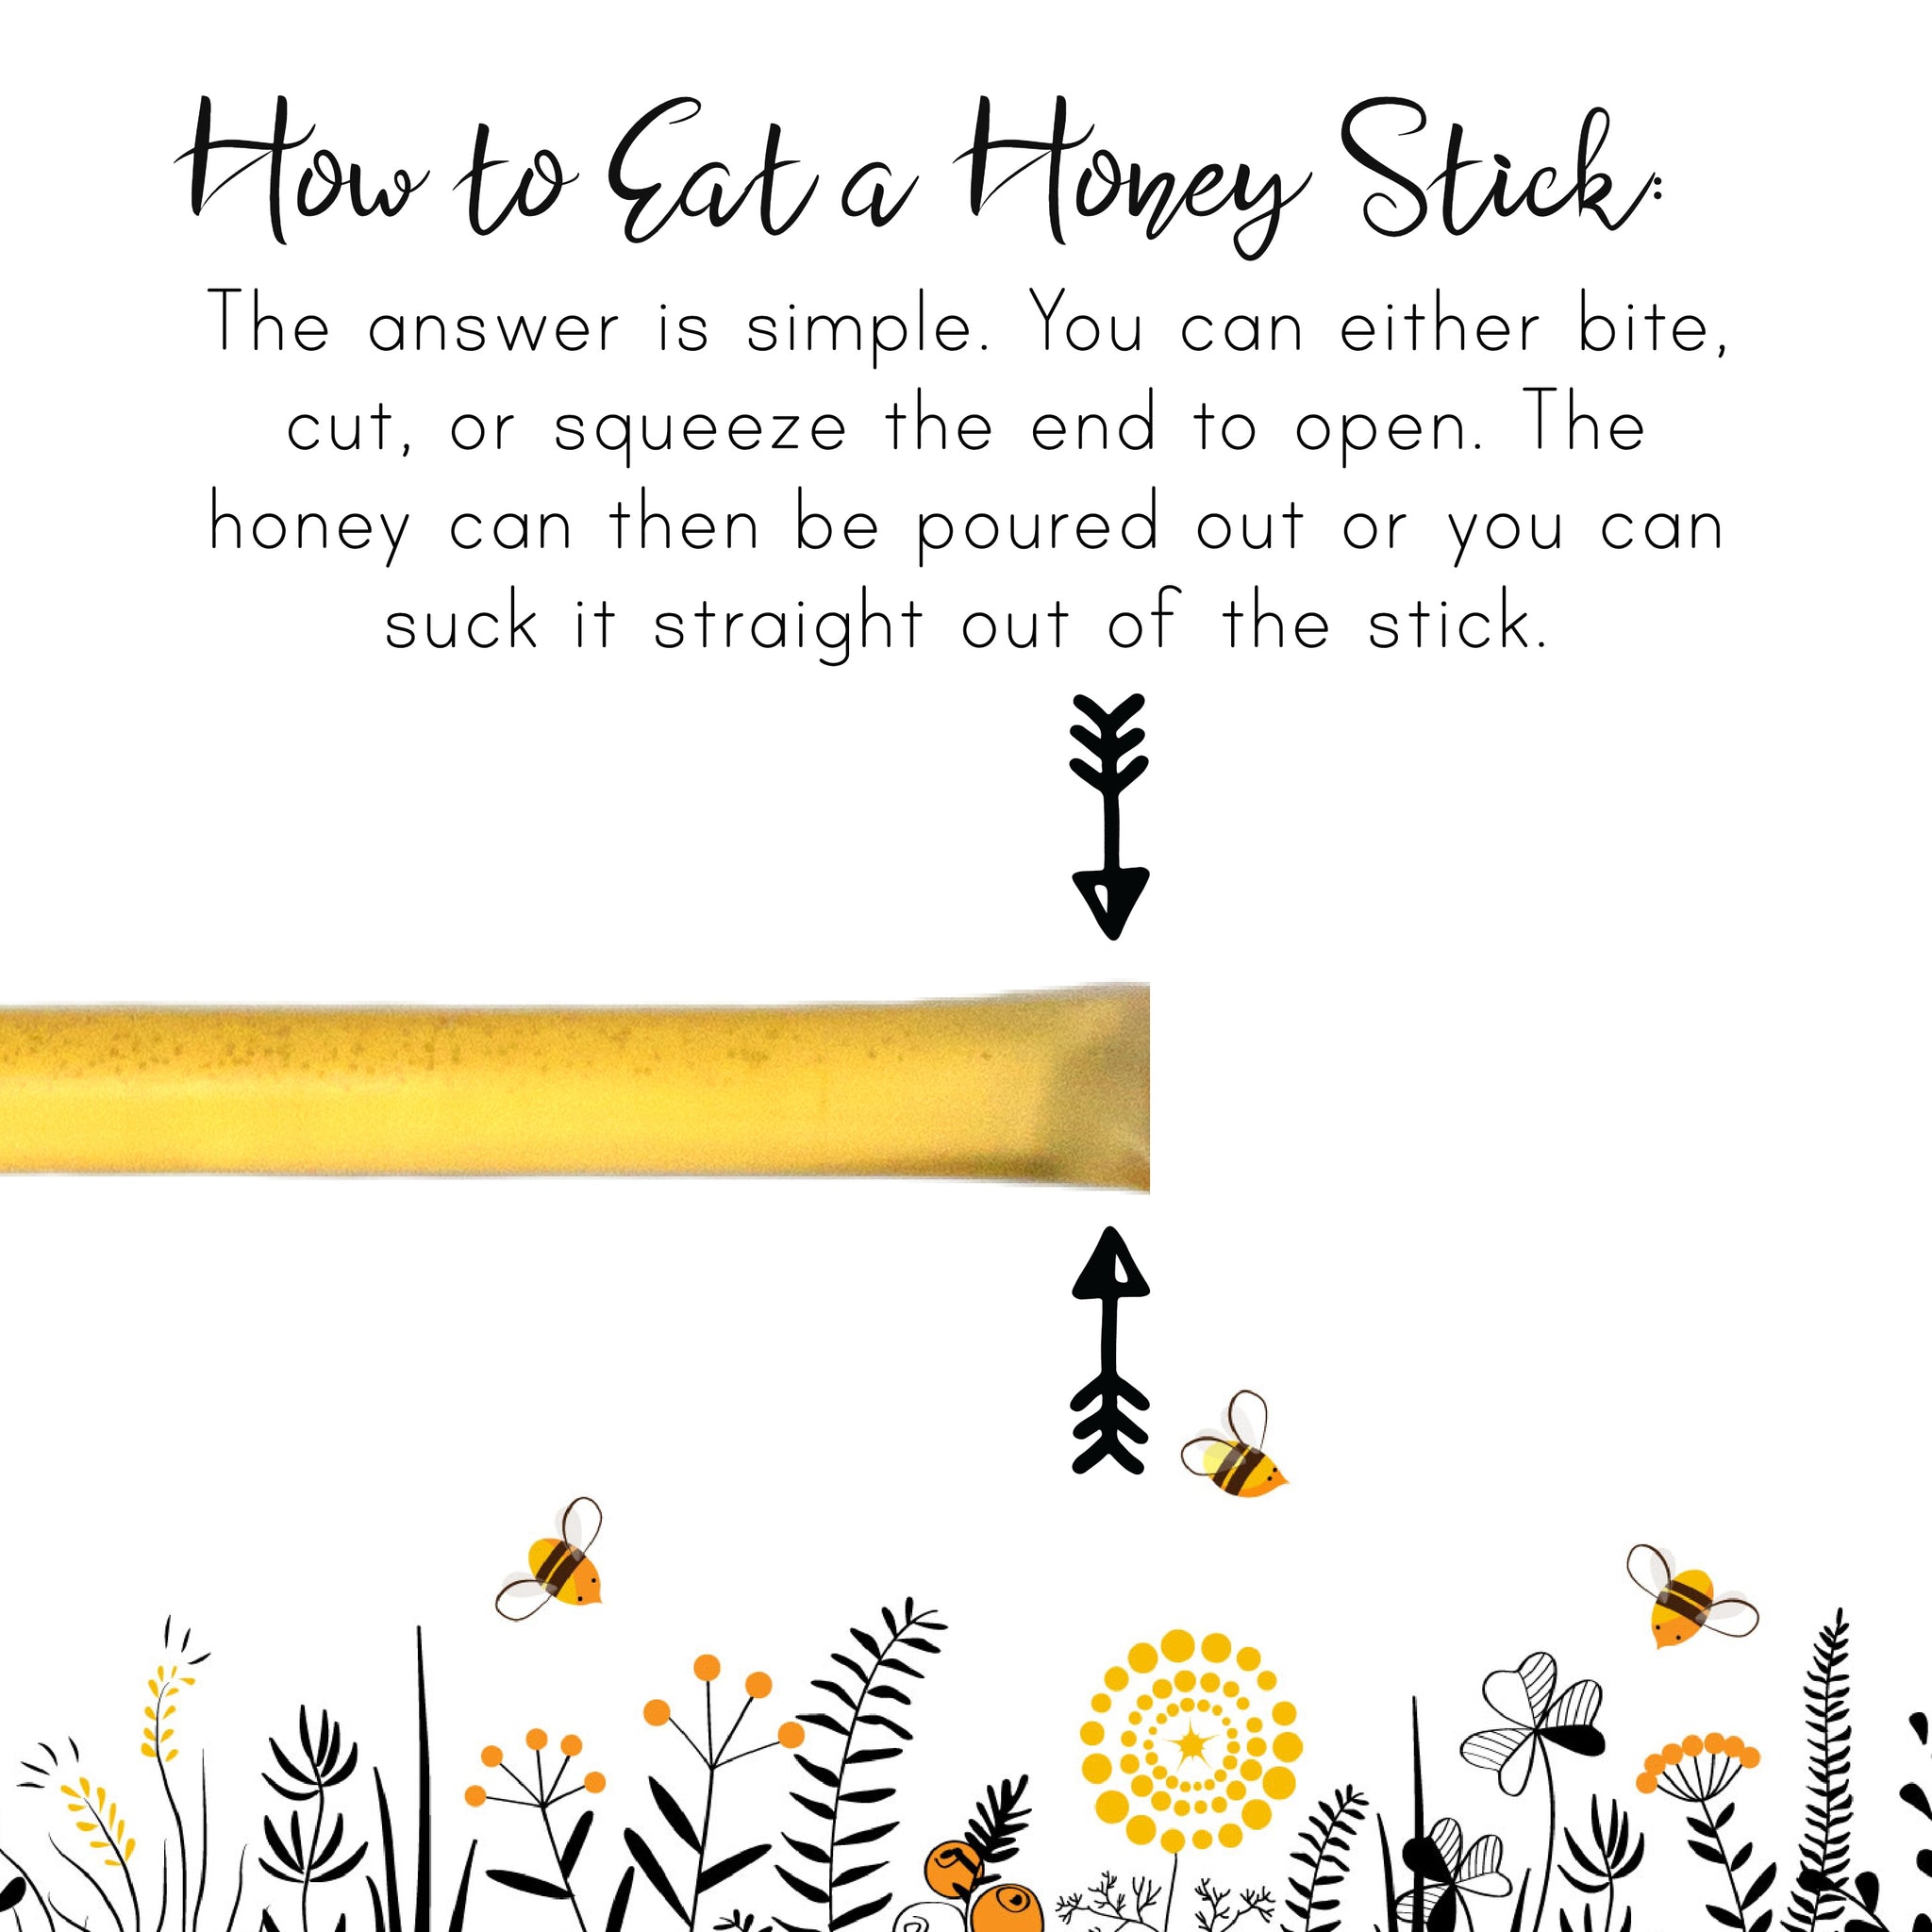 Pure Northern Michigan Honey Sticks.